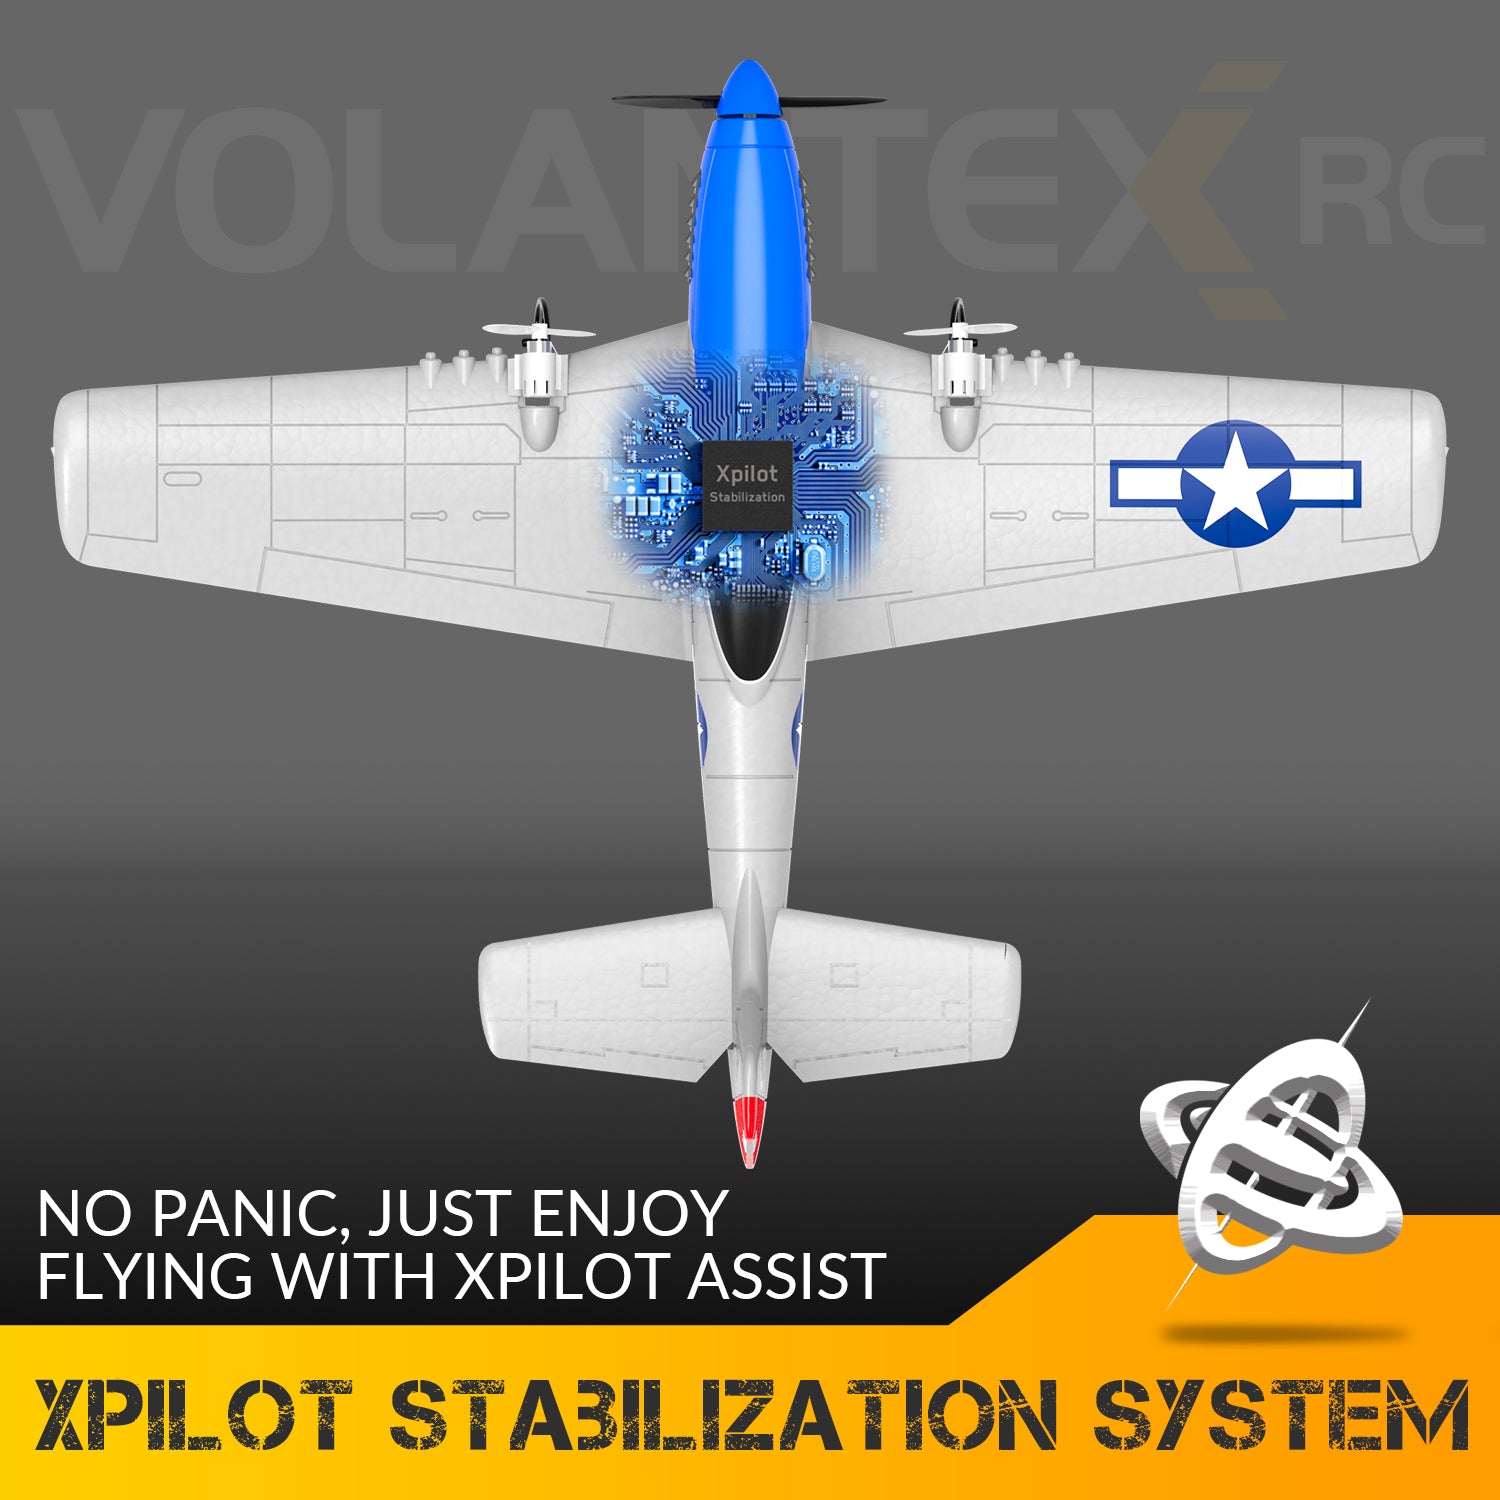 VOLANTEXRC P-51D Mustang 4-Chビギナー飛行機（Xpilotスタビライザー付き）-ワンキー曲技飛行（761-5）RTF